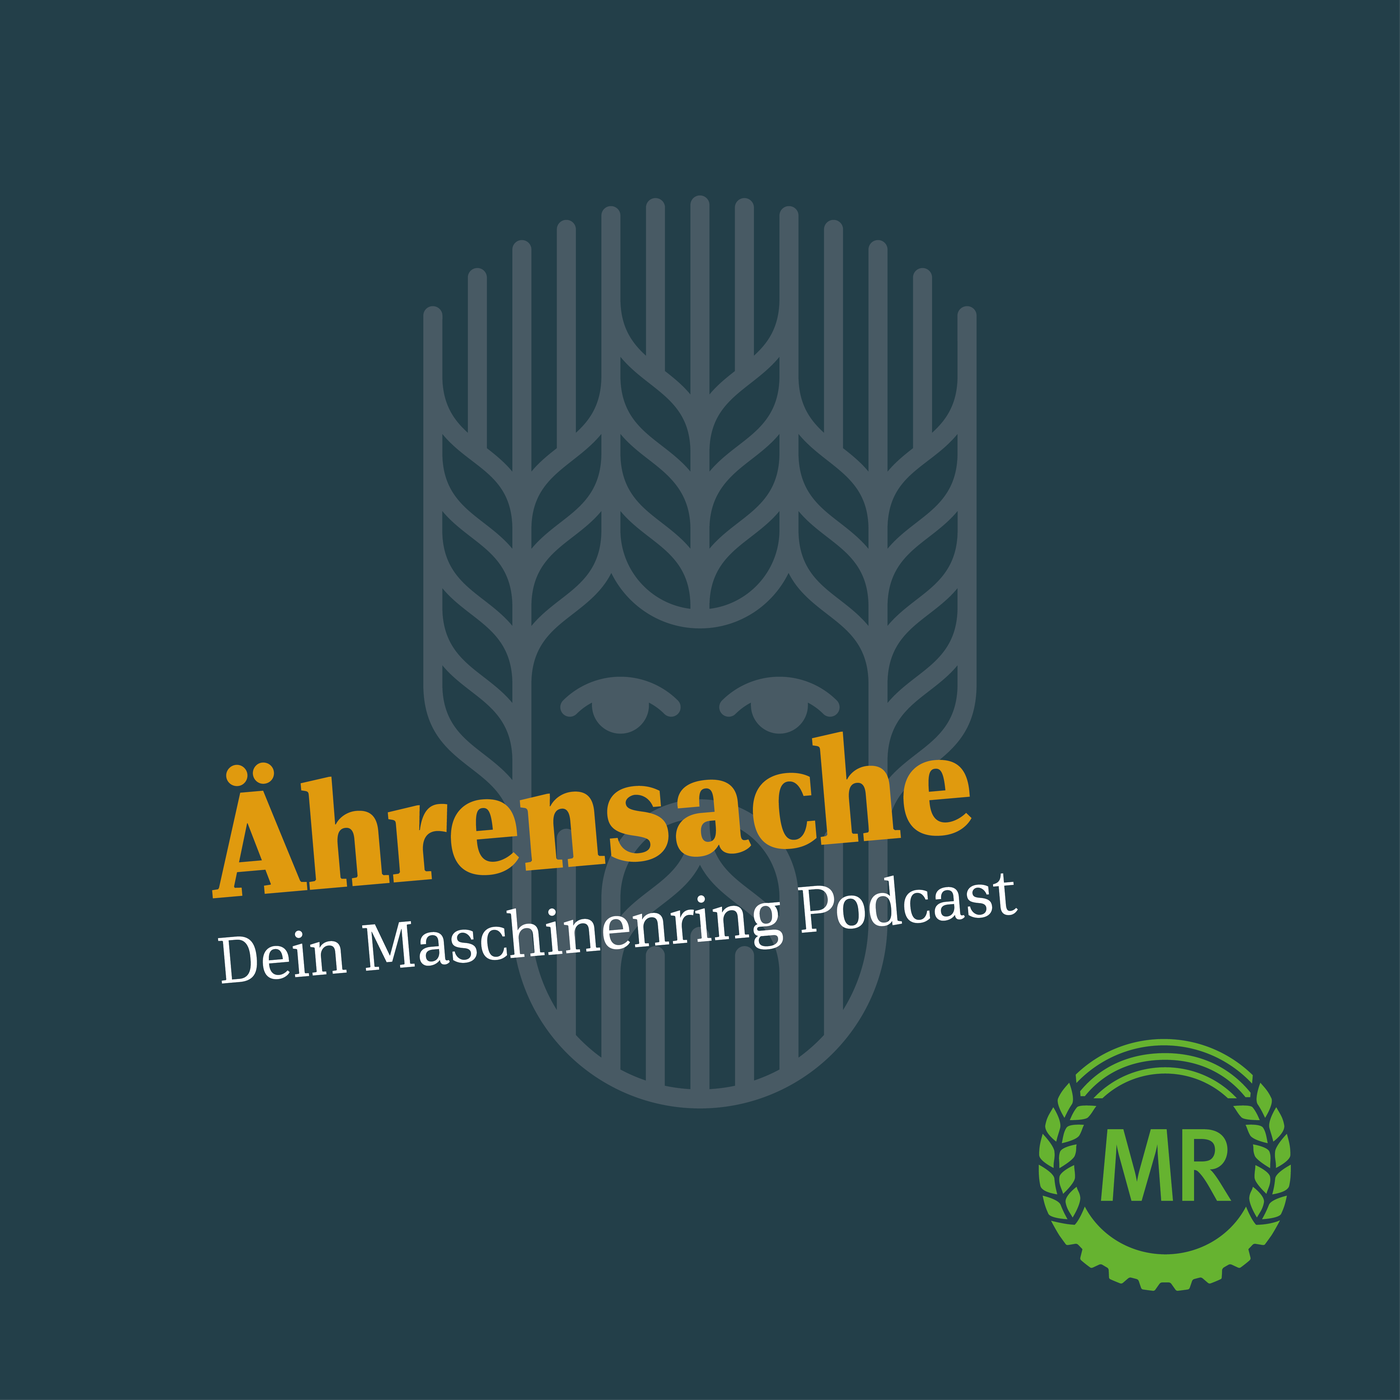 Ährensache - Der Maschinenring Podcast